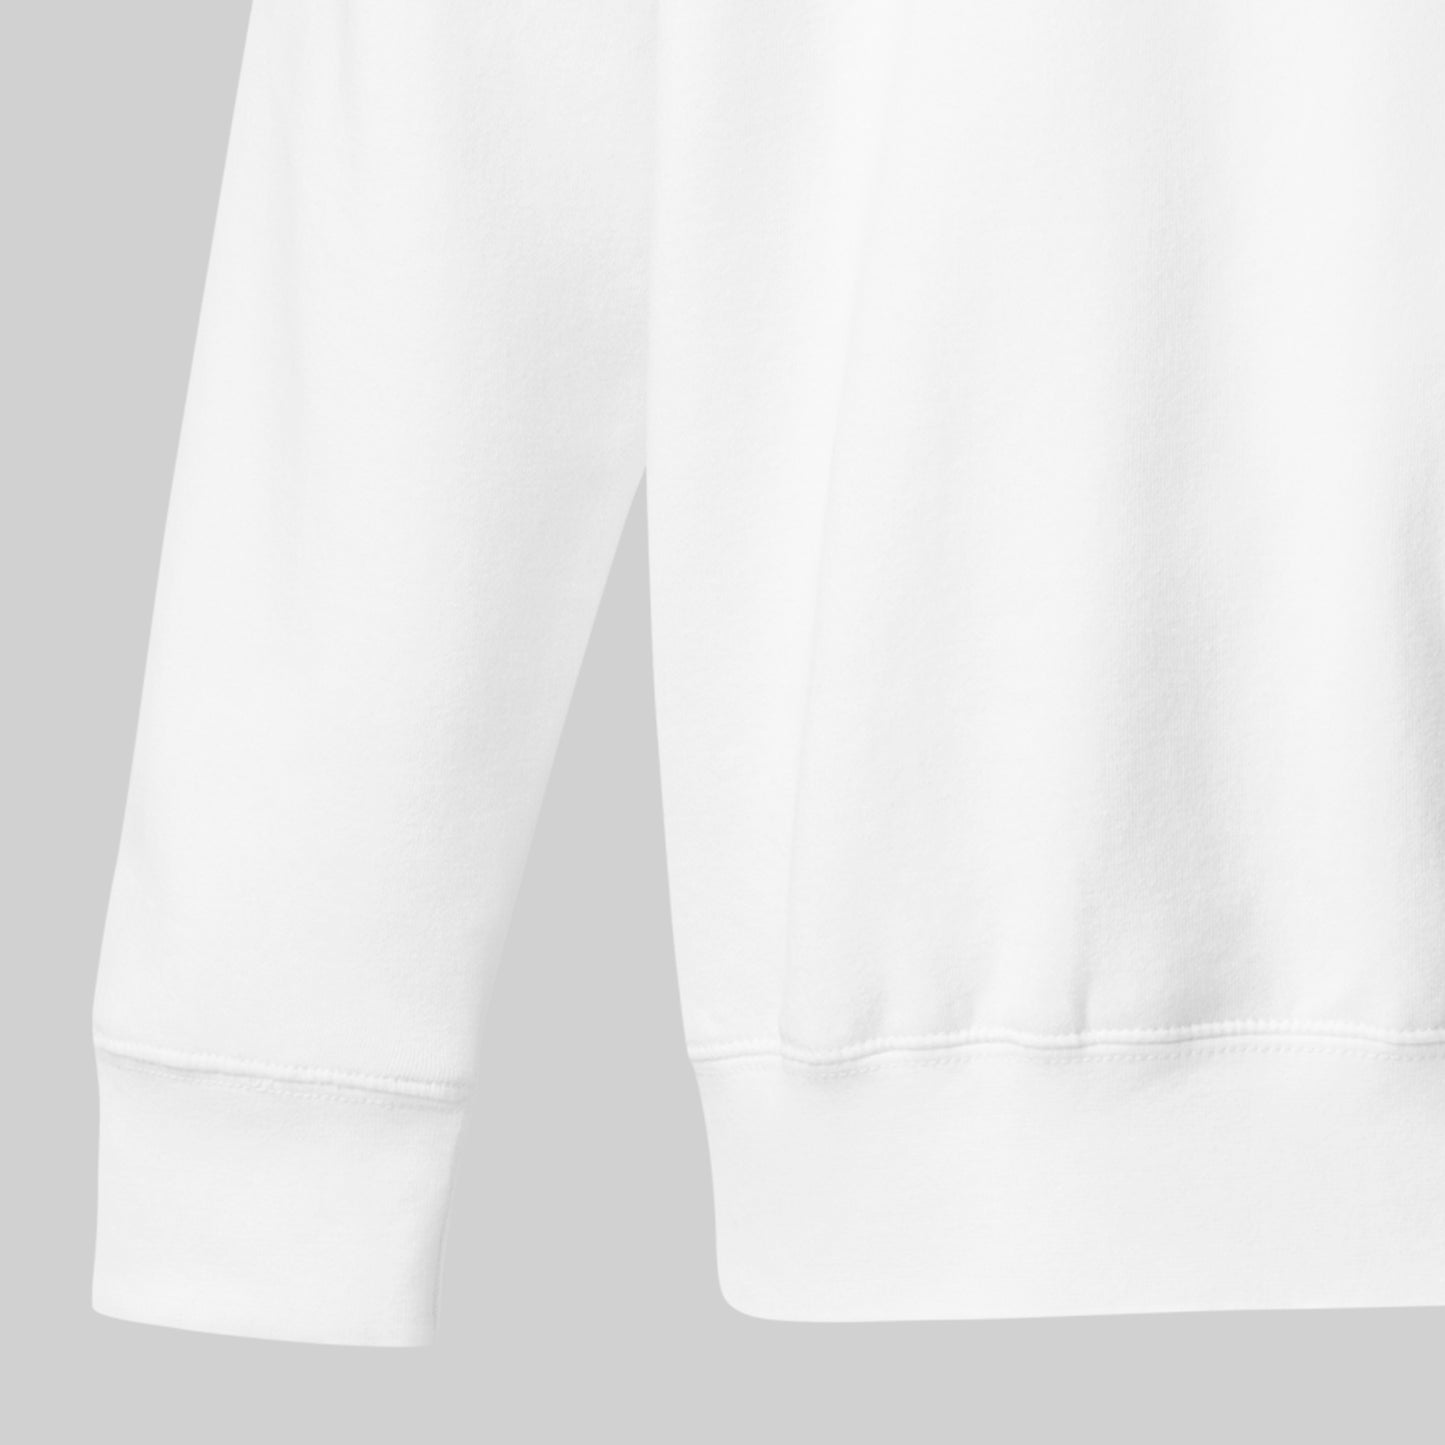 stitch detail on white Ivory Guard Unisex Premium Sweatshirt